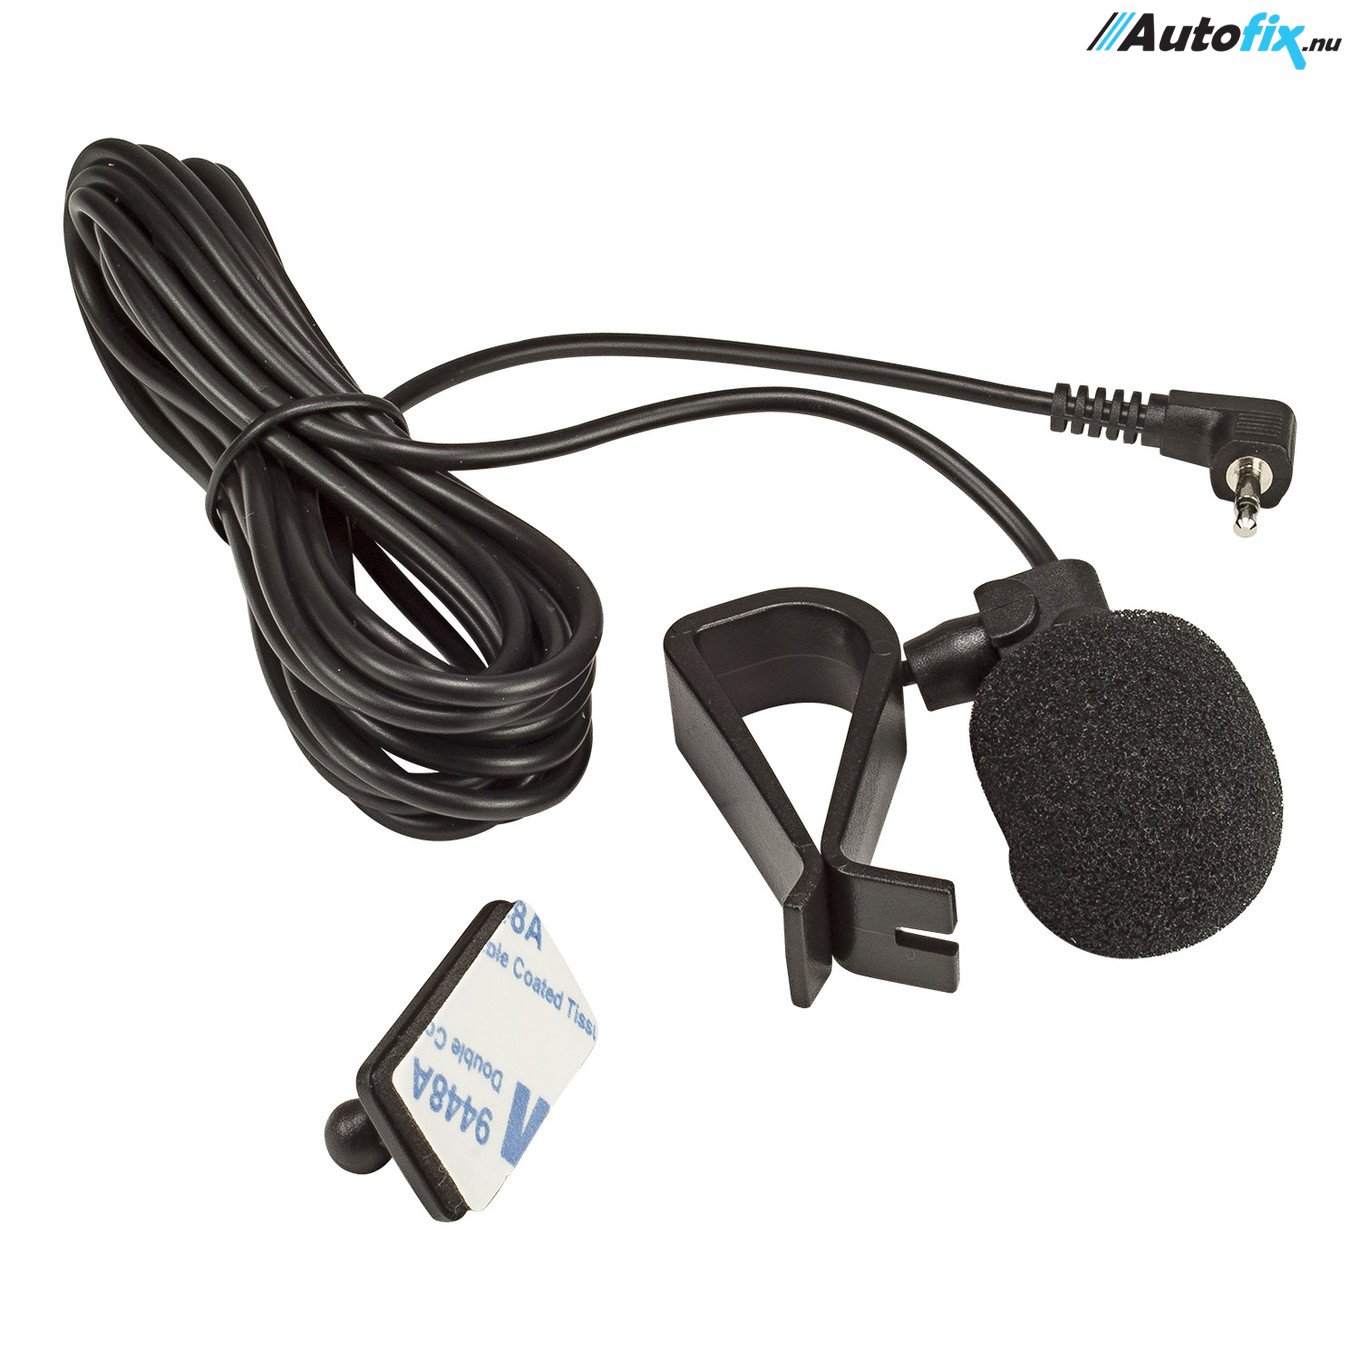 Mikrofon Til bil Med 2,5 mm - Blaupunkt & Pioneer - Kabel 3 meter - Mikrofoner - Autofix.nu